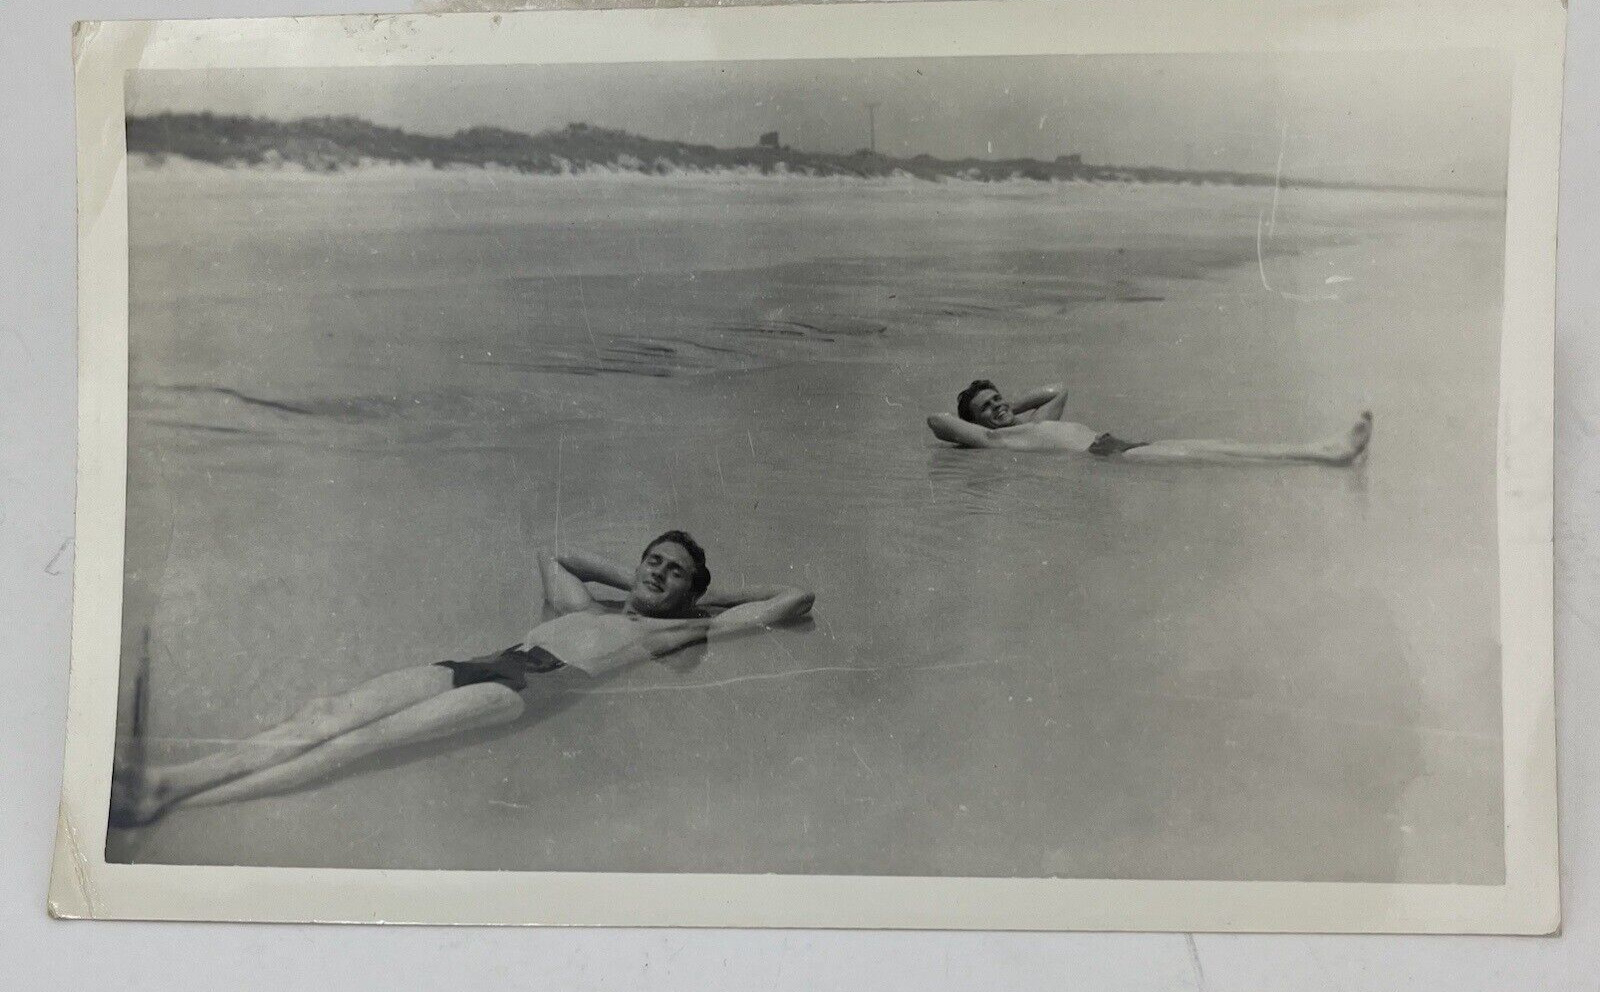 Vintage Photo 1930s Shirtless Men Swimming Suit Beach Laying in Water Two Men